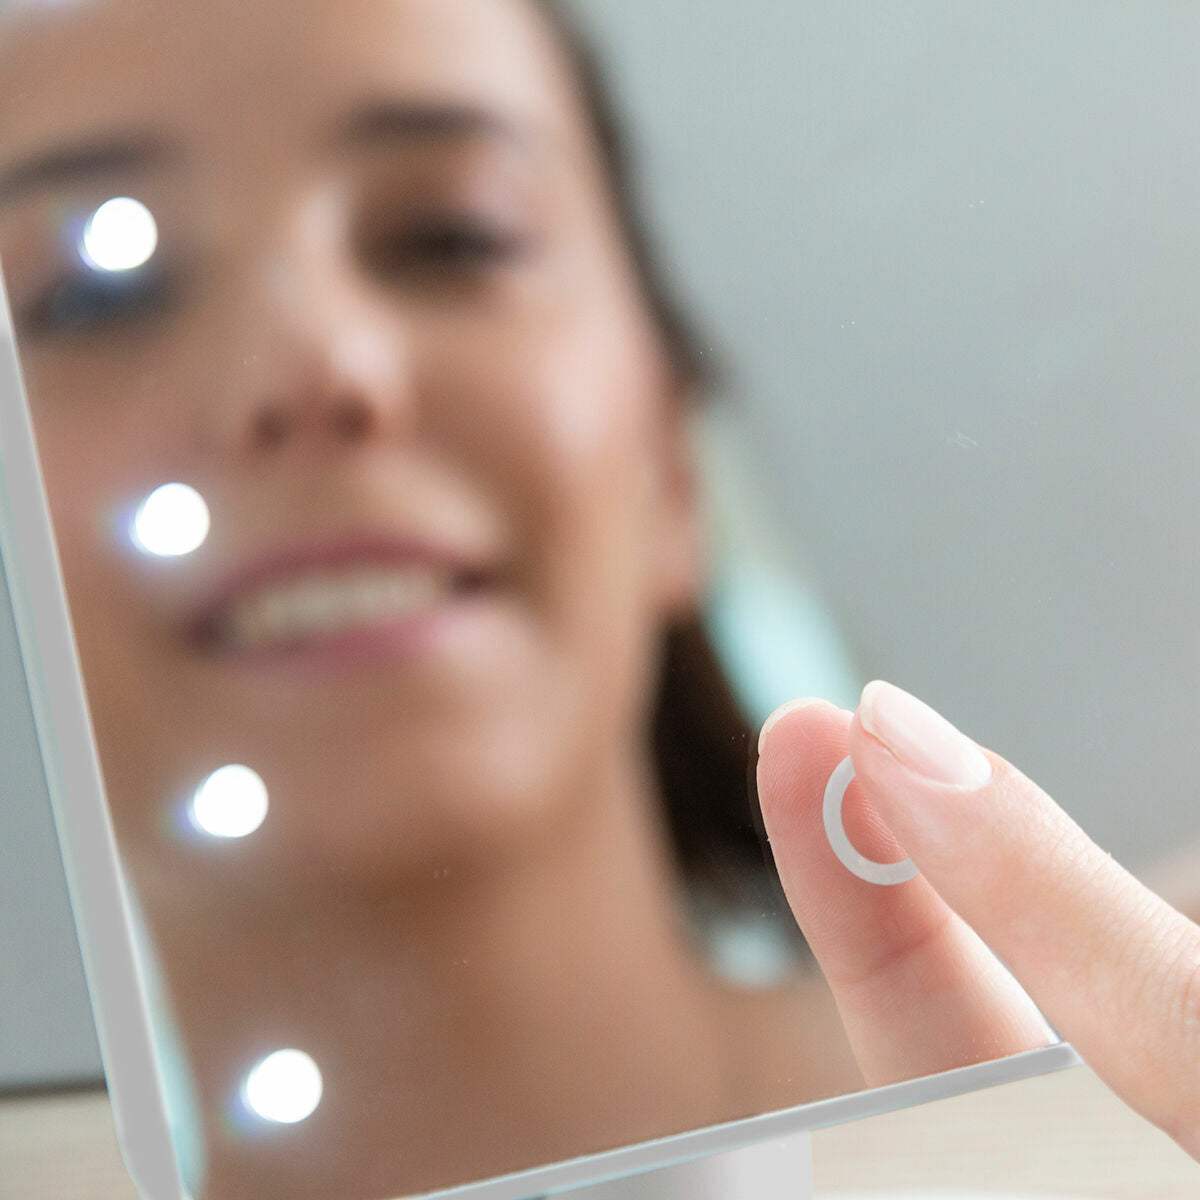 Miroir de Table LED Tactile InnovaGoods